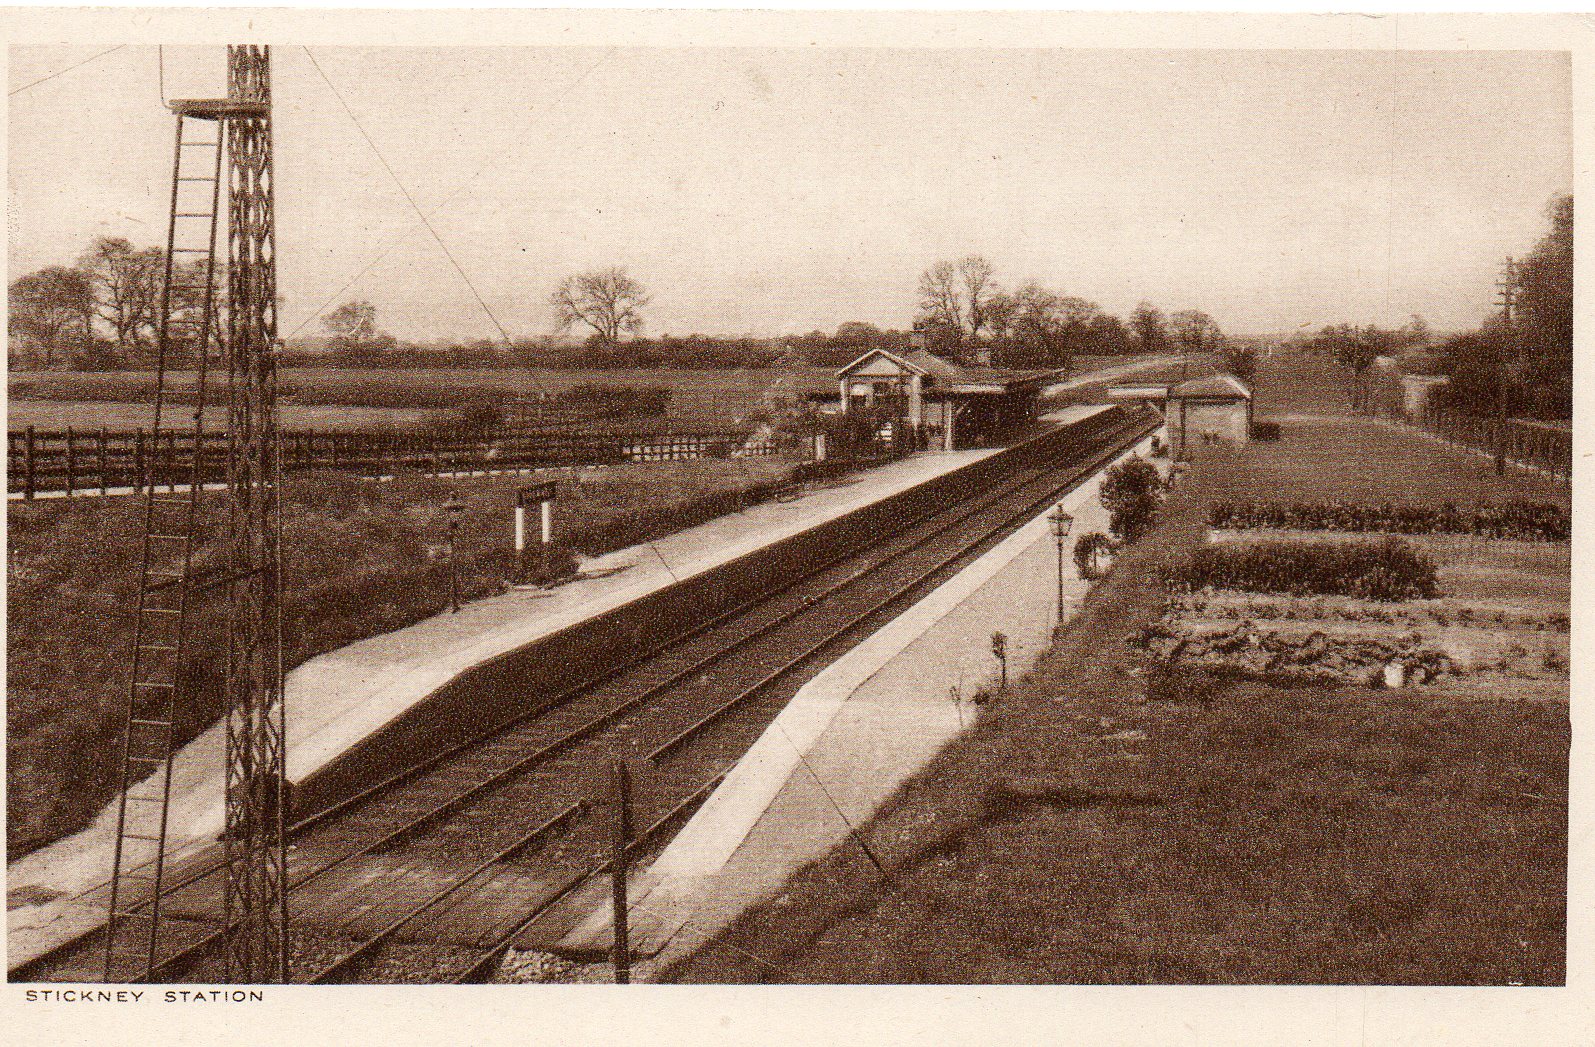 Stickney railway station